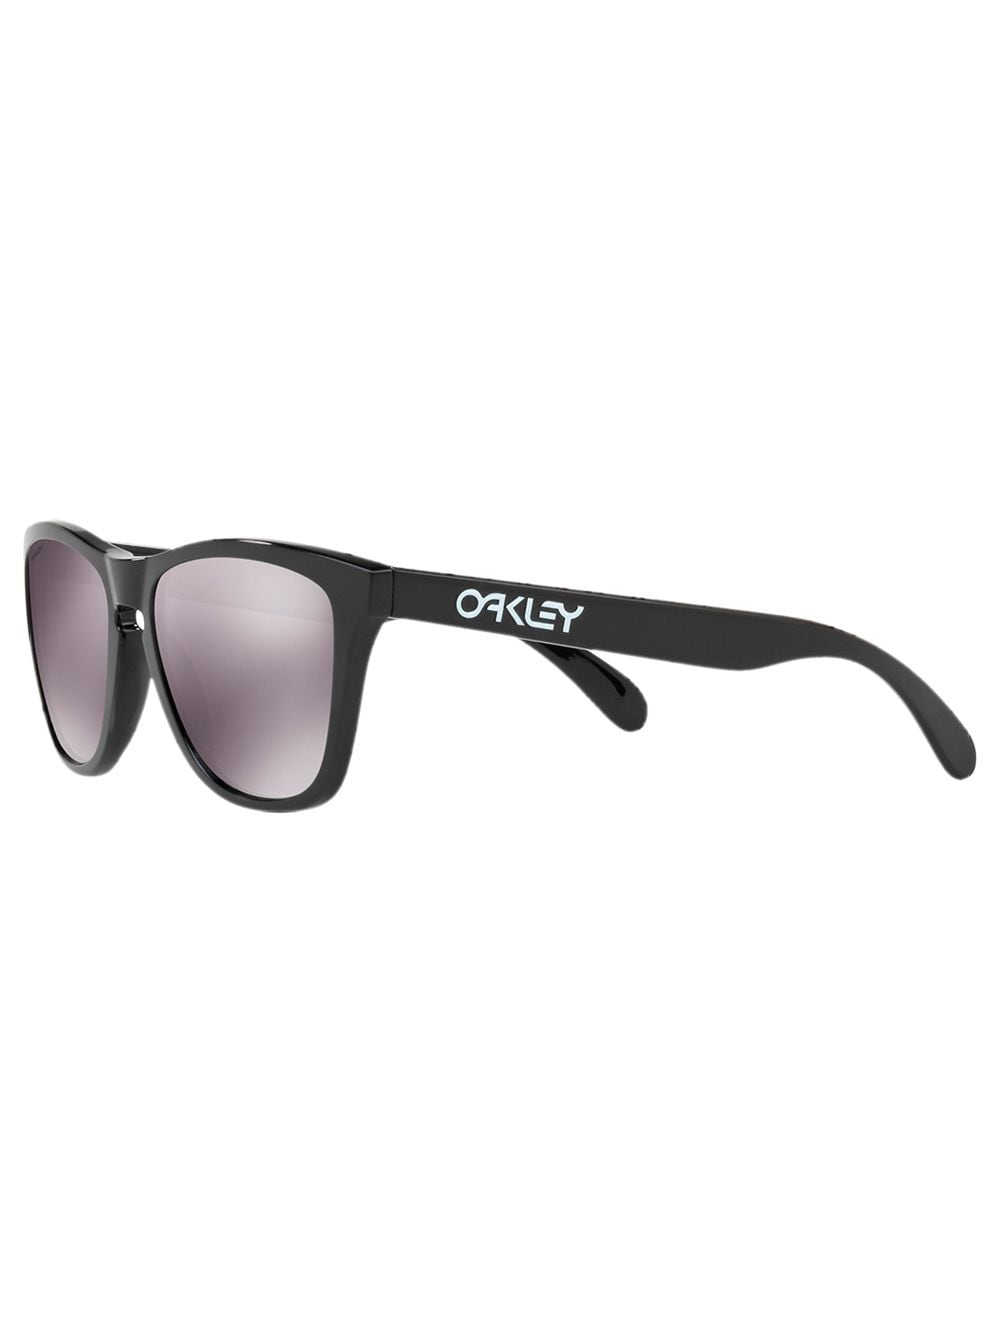 Image 2 of Oakley Frogskins sunglasses